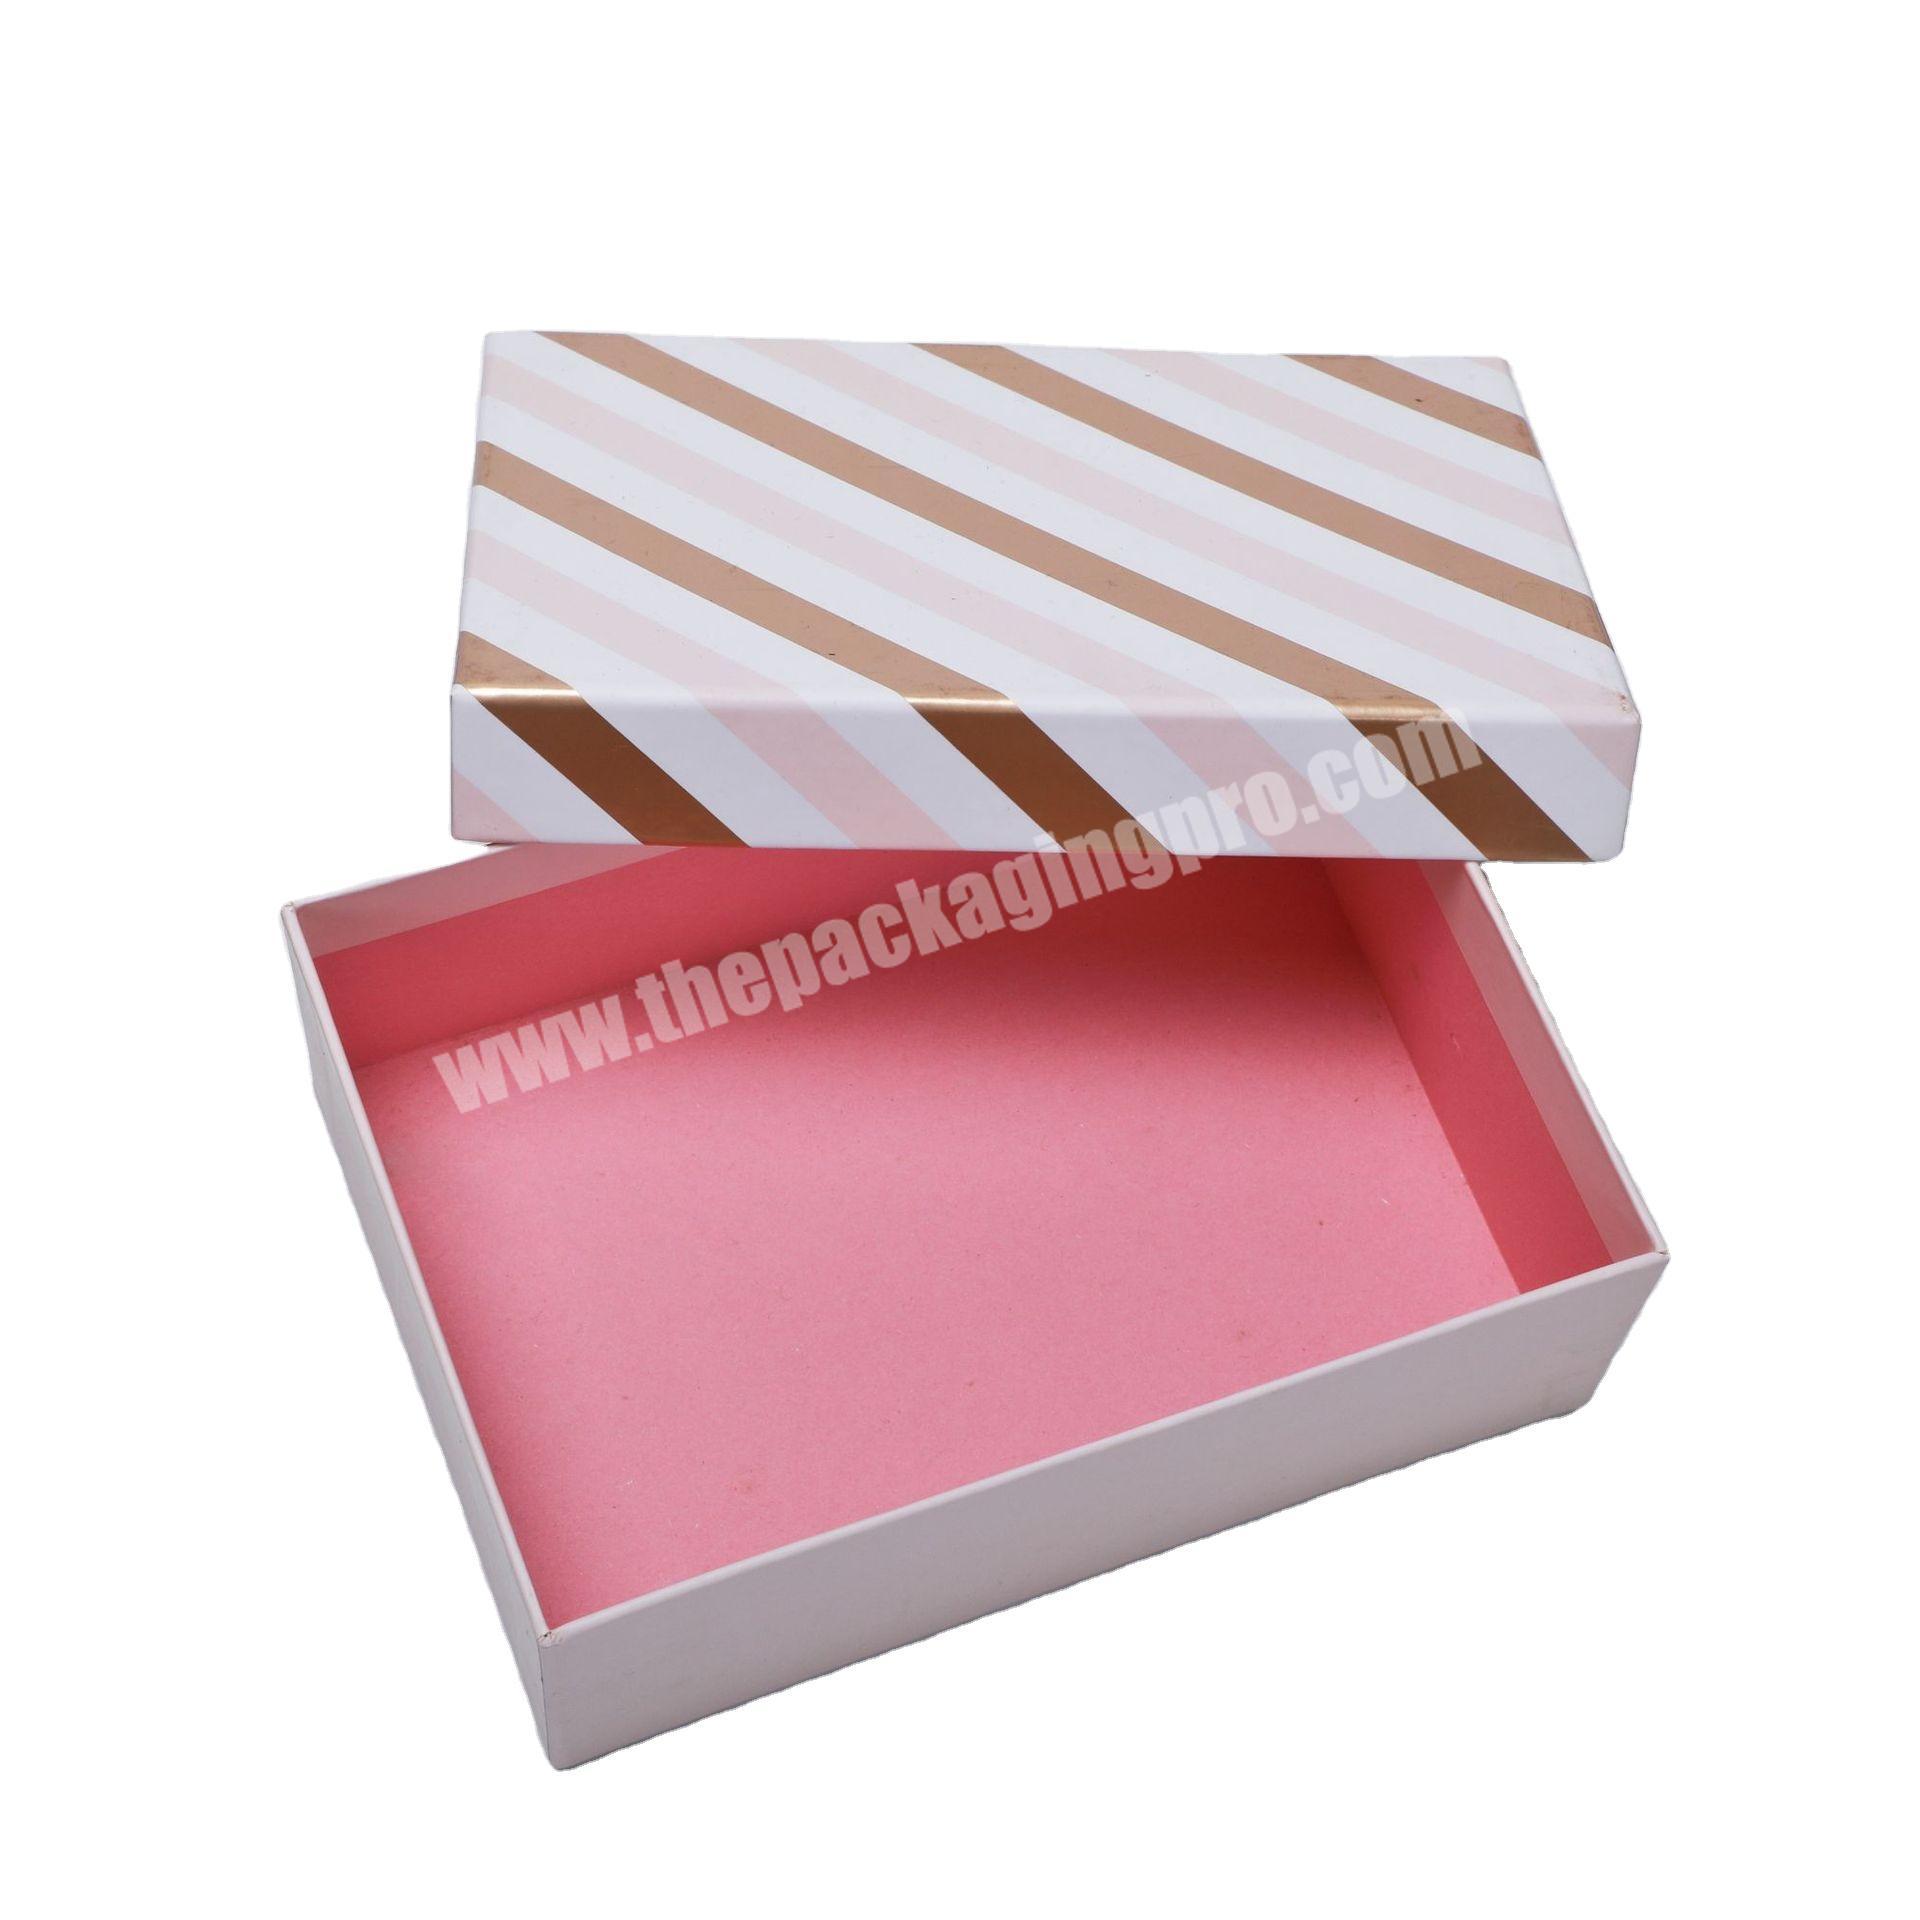 Yiwu factory customized internal pink lifting box packaging hot stamping silver foil LOGO gift box